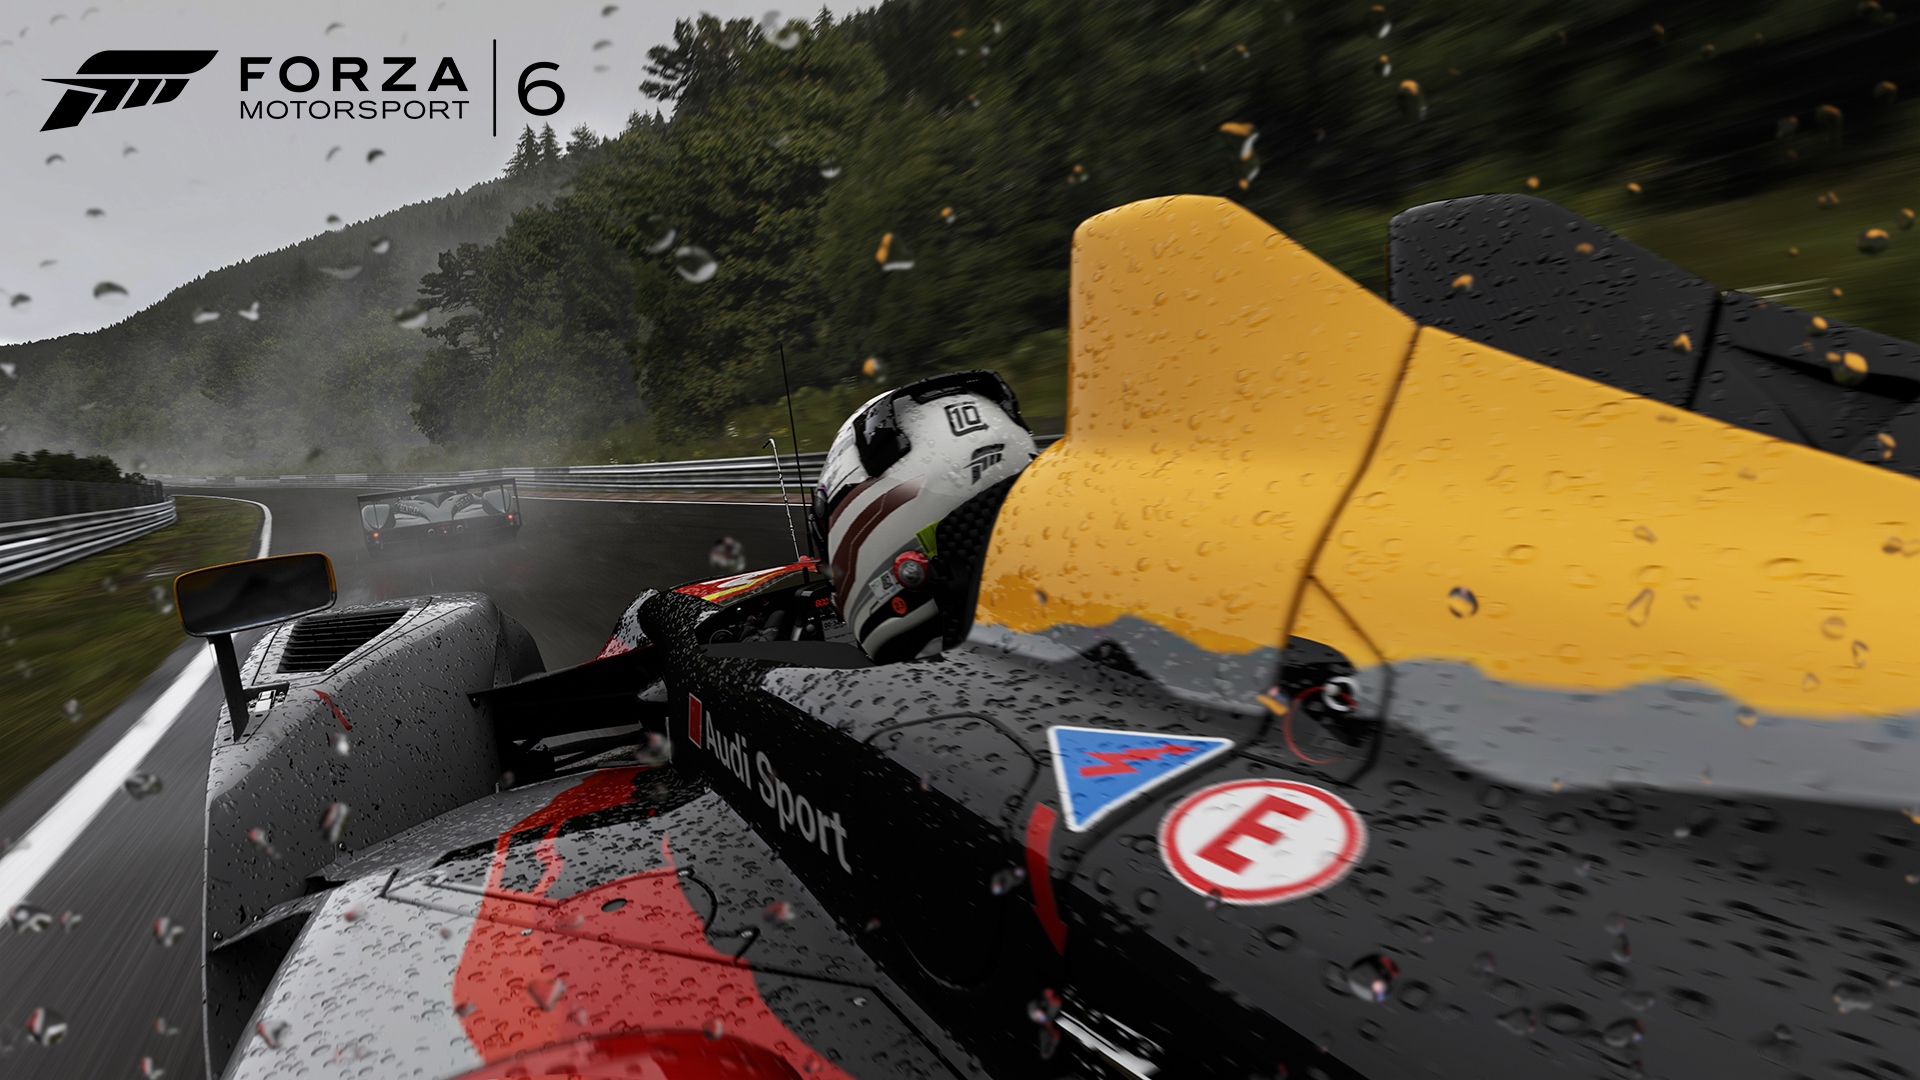 Forza Motorsport 6 Jazda na mokrch tratiach si vyaduje cvik, kee kad kalu me znamena problm.